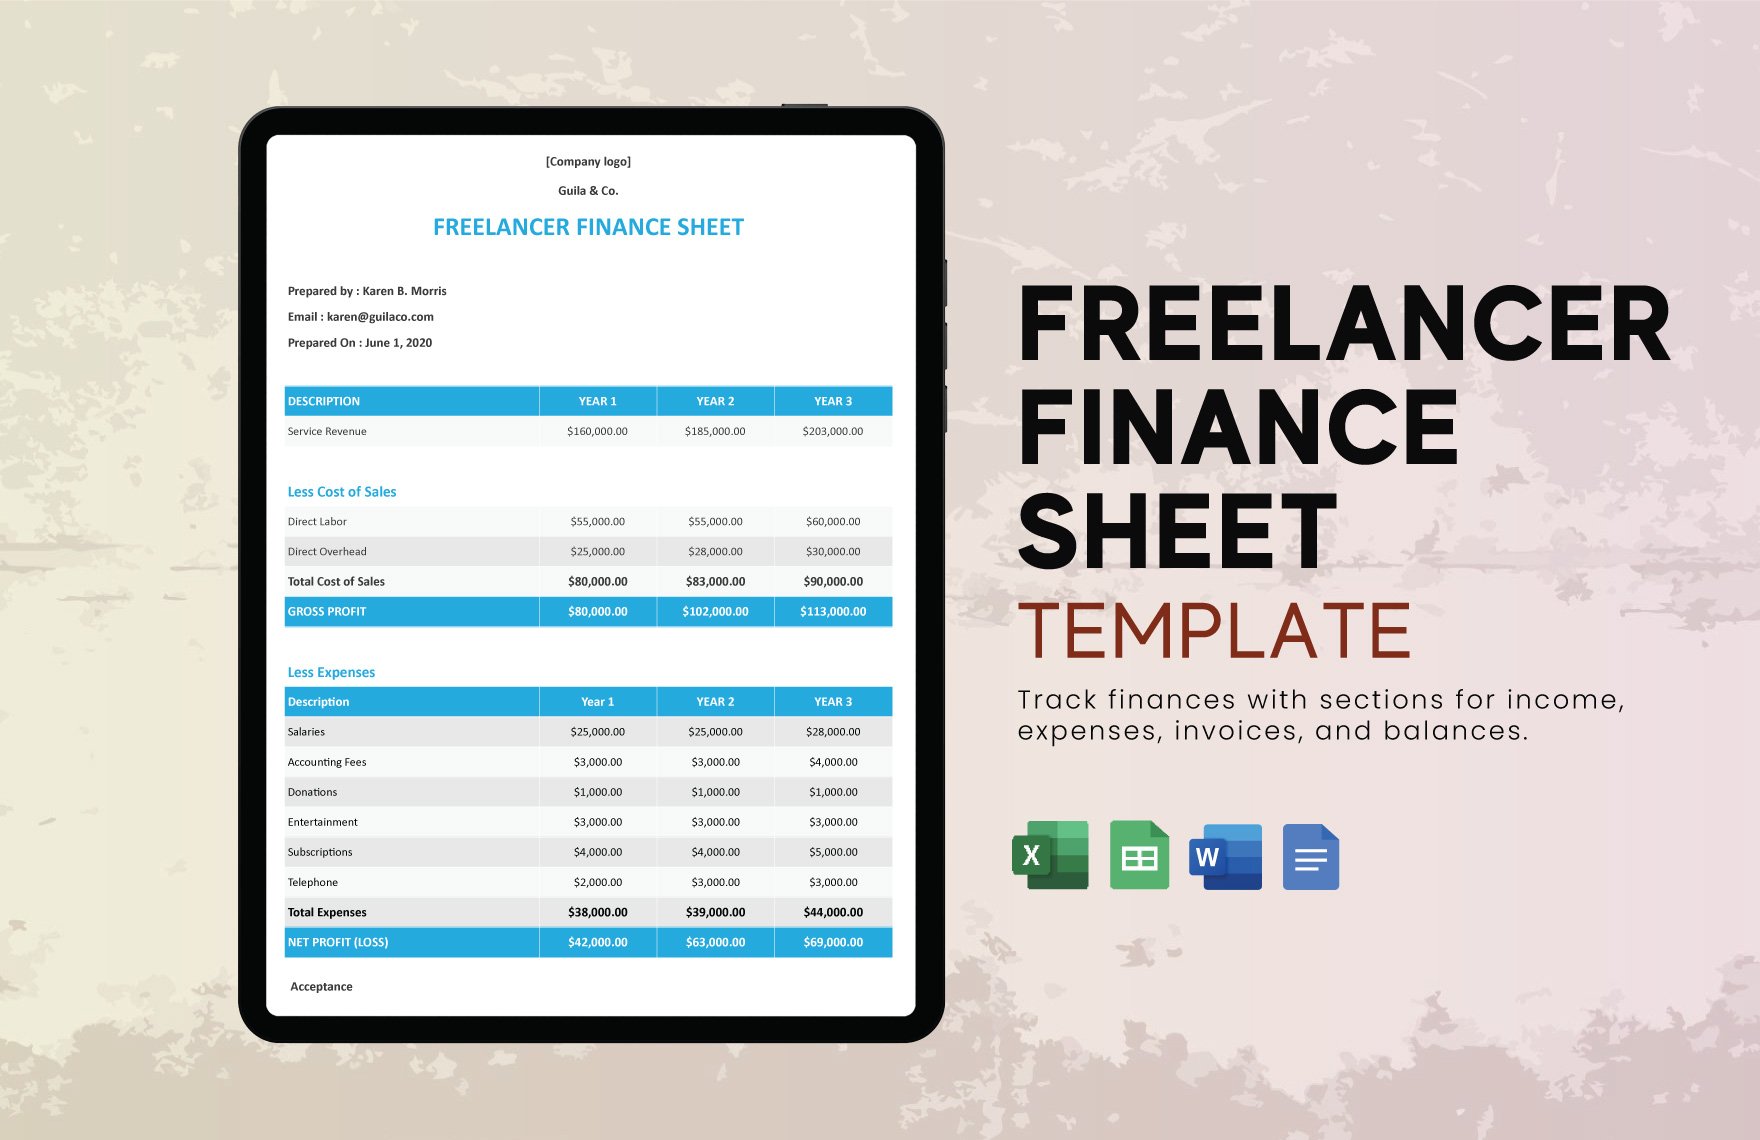 Freelancer Finance Sheet Template in Word, Google Docs, Excel, Google Sheets